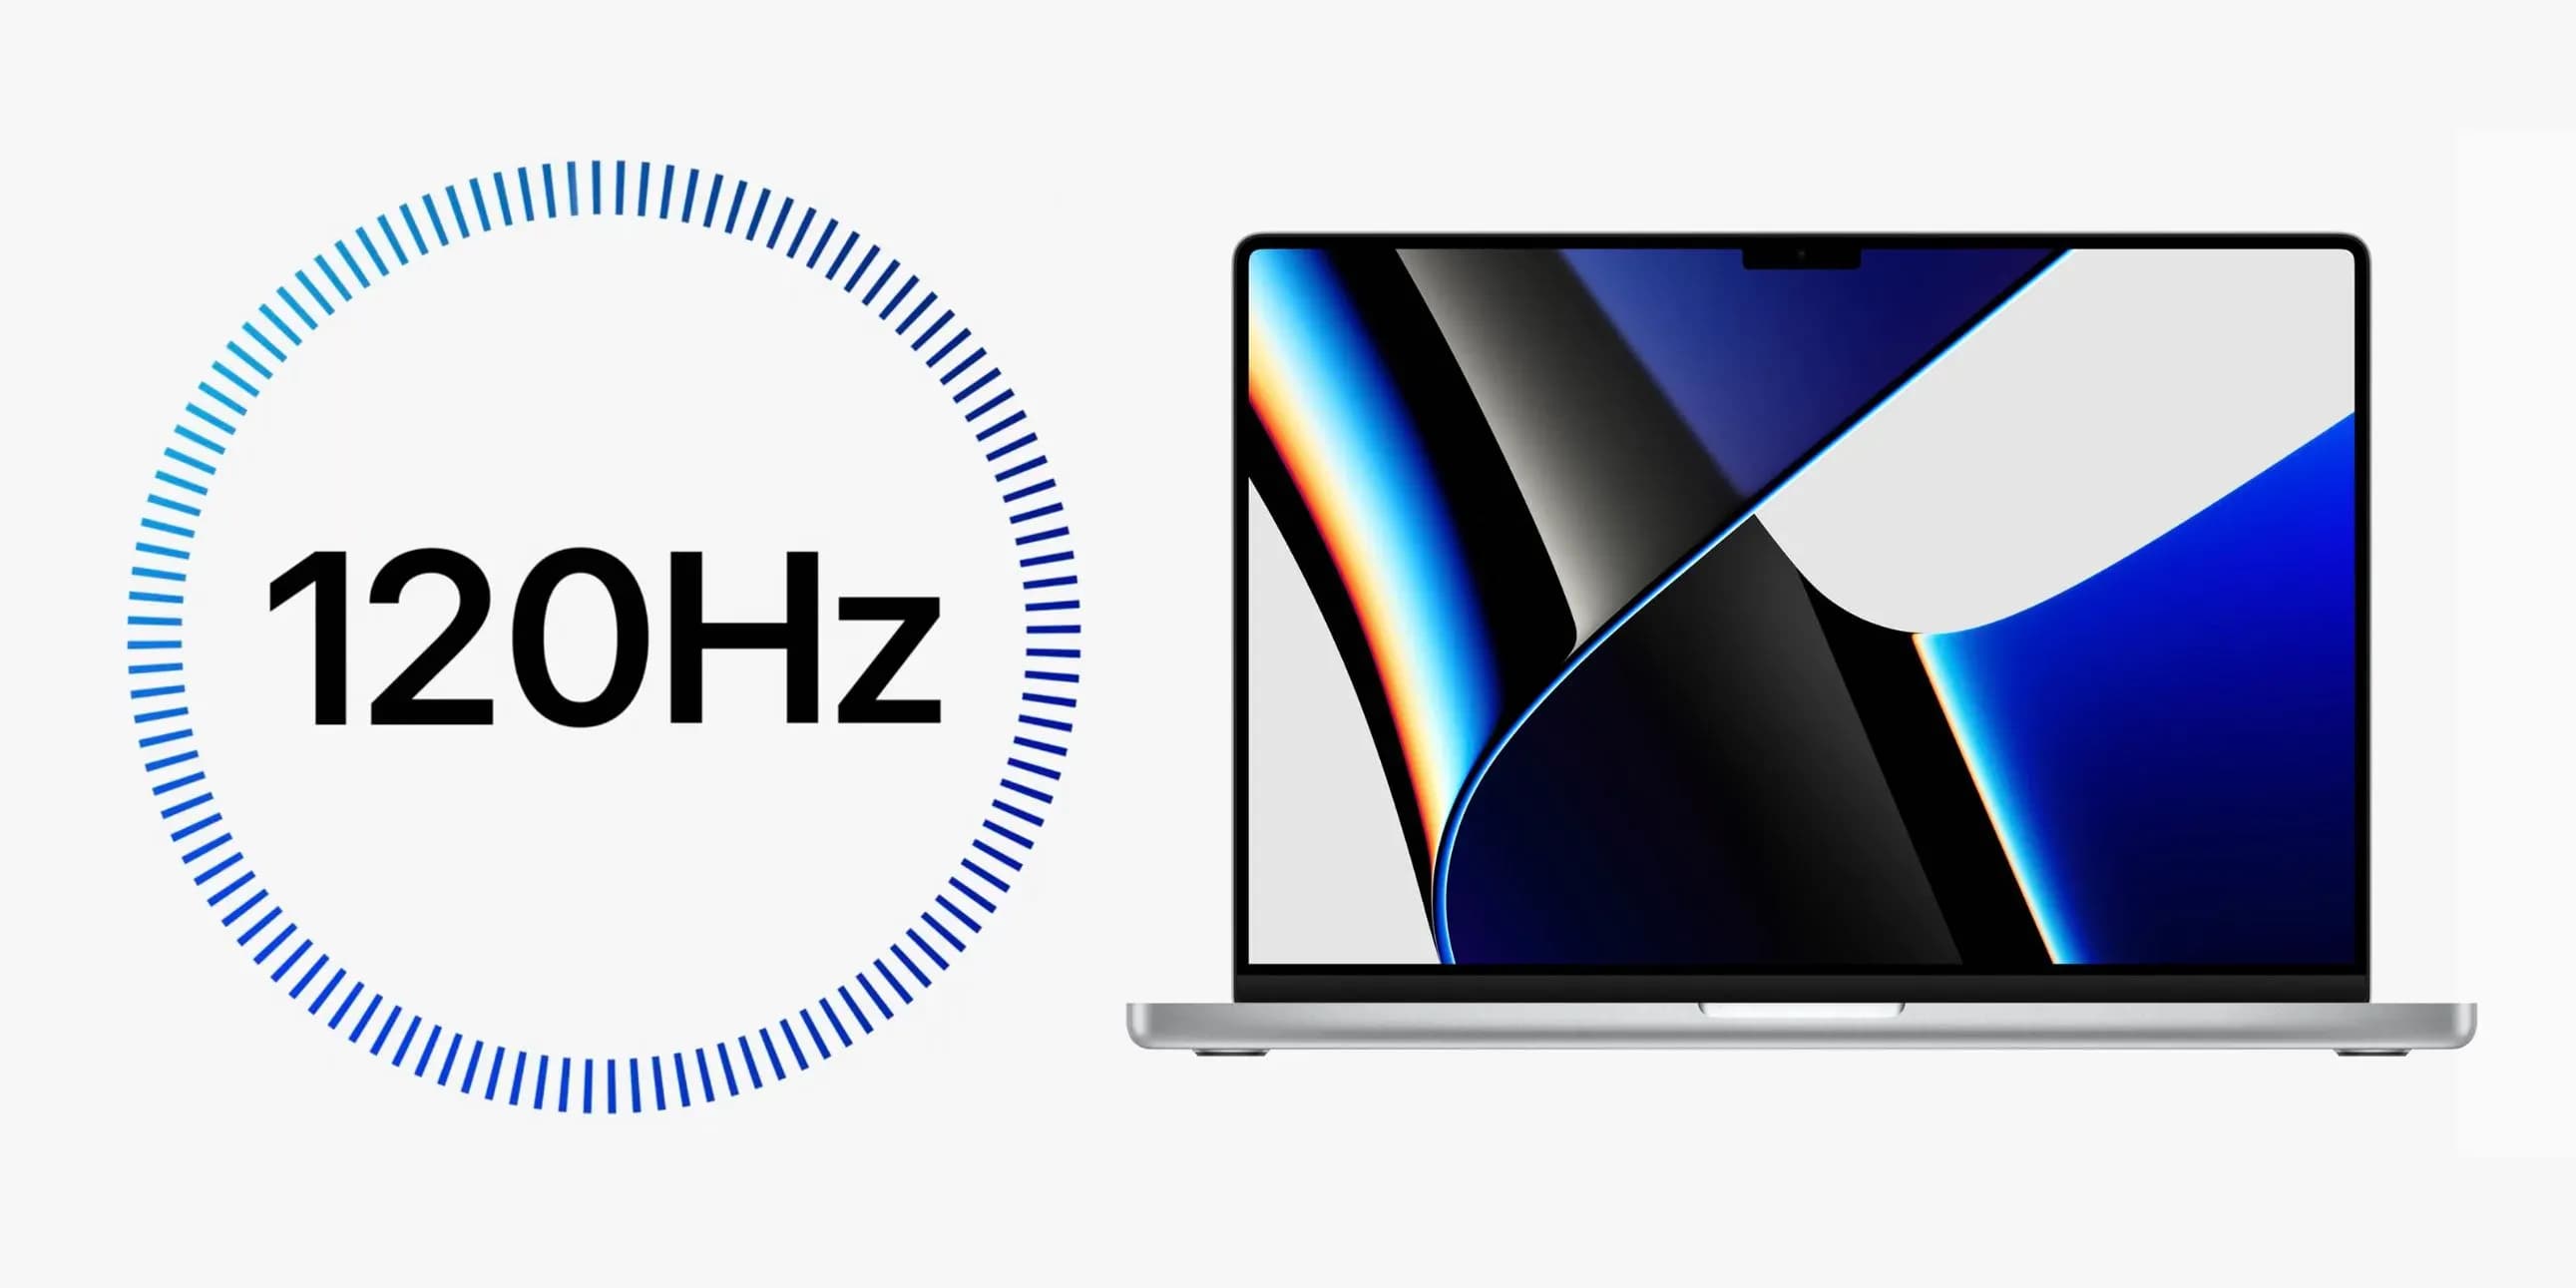 MacBooks to receive OLED 120 Hz display soon